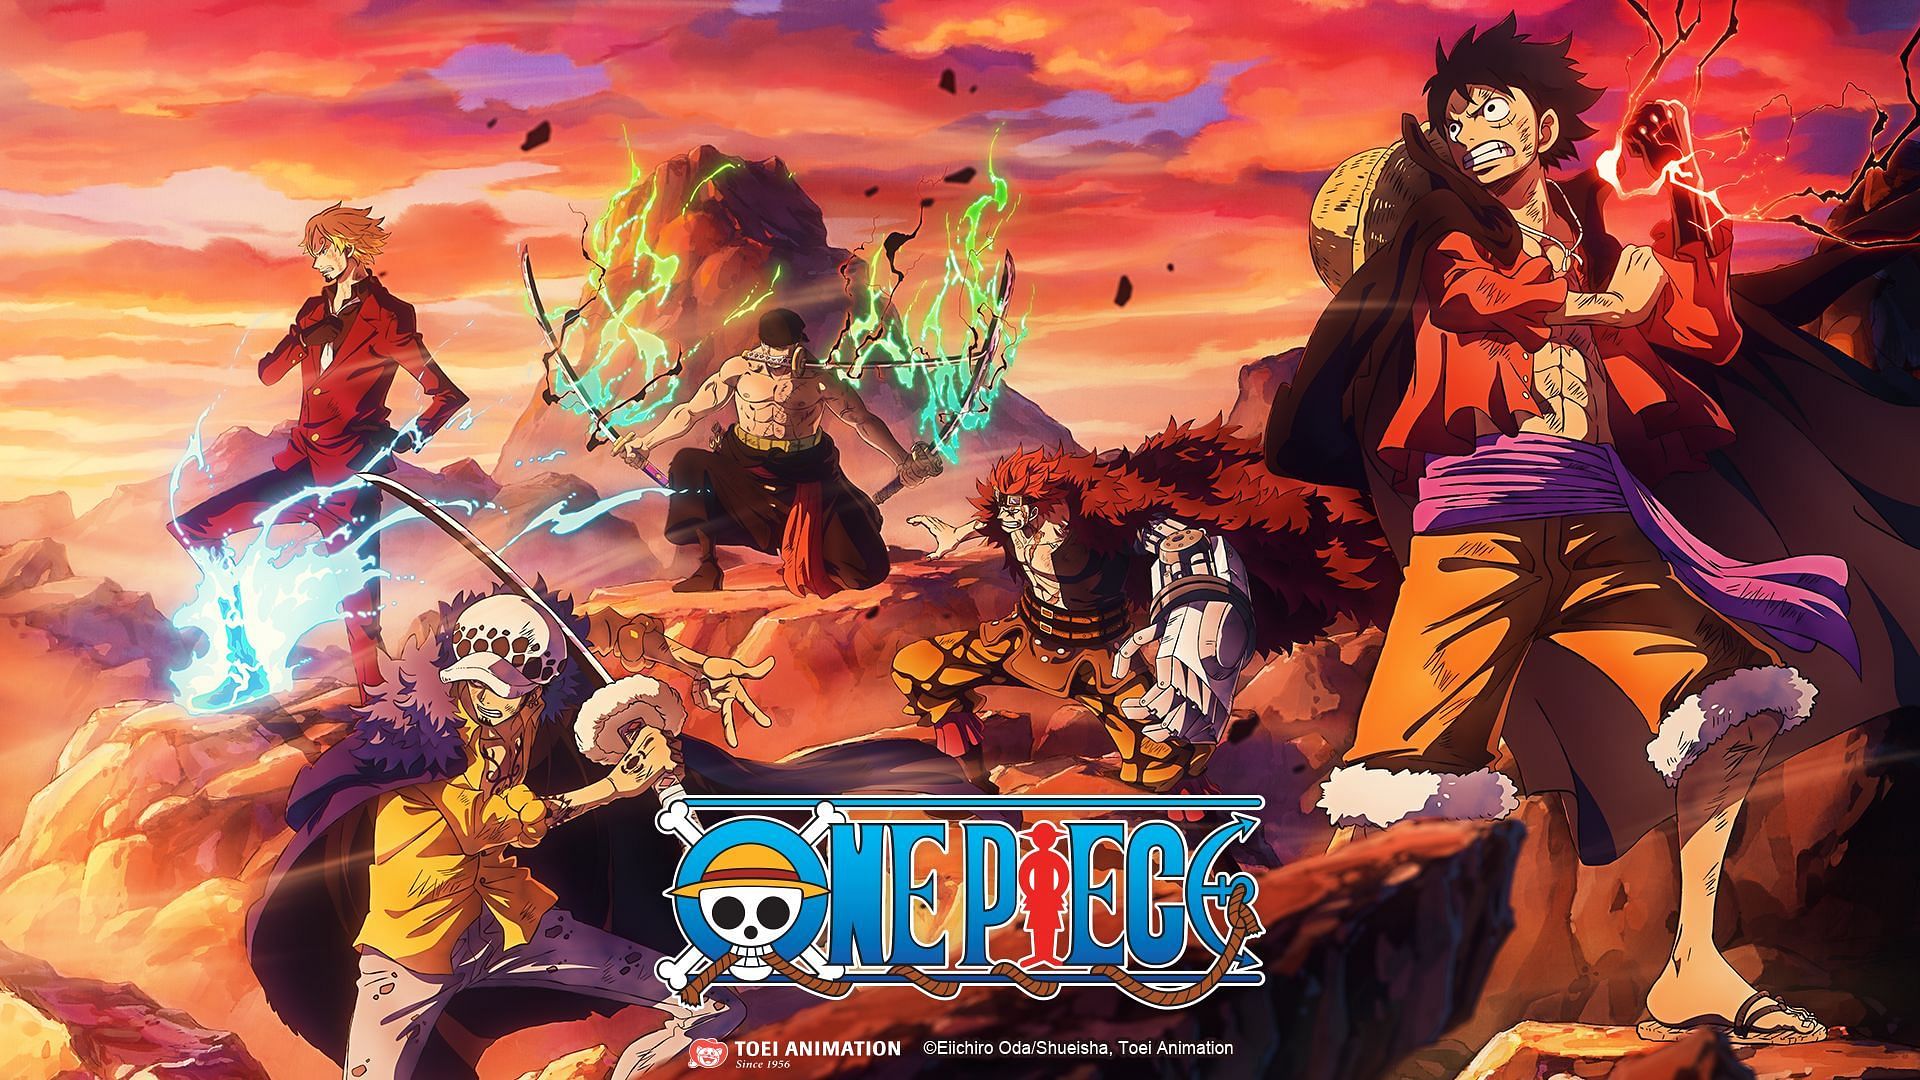 Rumor: Fortnite leaks hint at possible One Piece collaboration (Image via Eiichiro Oda/Shueisha, Toei Animation)